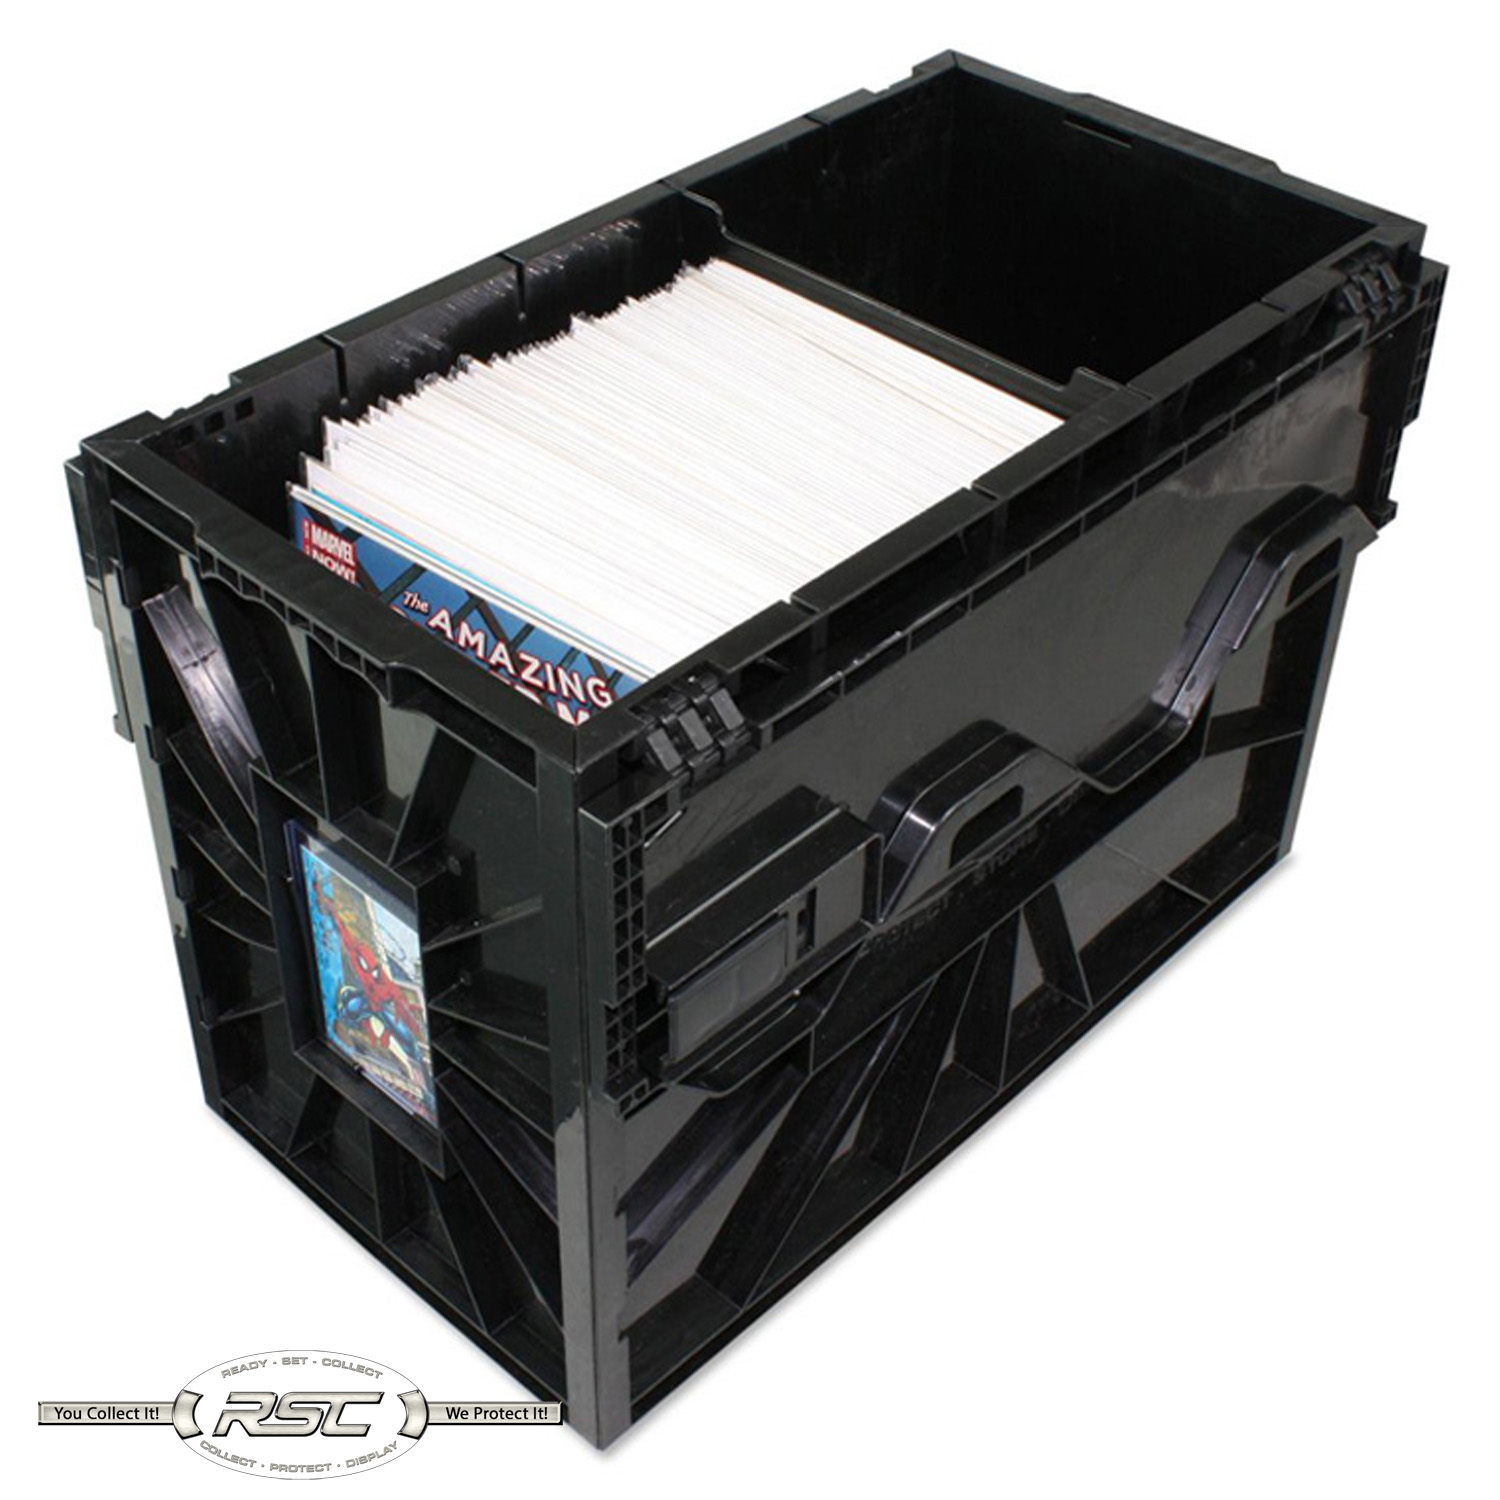 Short Comic Book Bin Black Plastic Storage Box Wone Partition intended for measurements 1500 X 1500